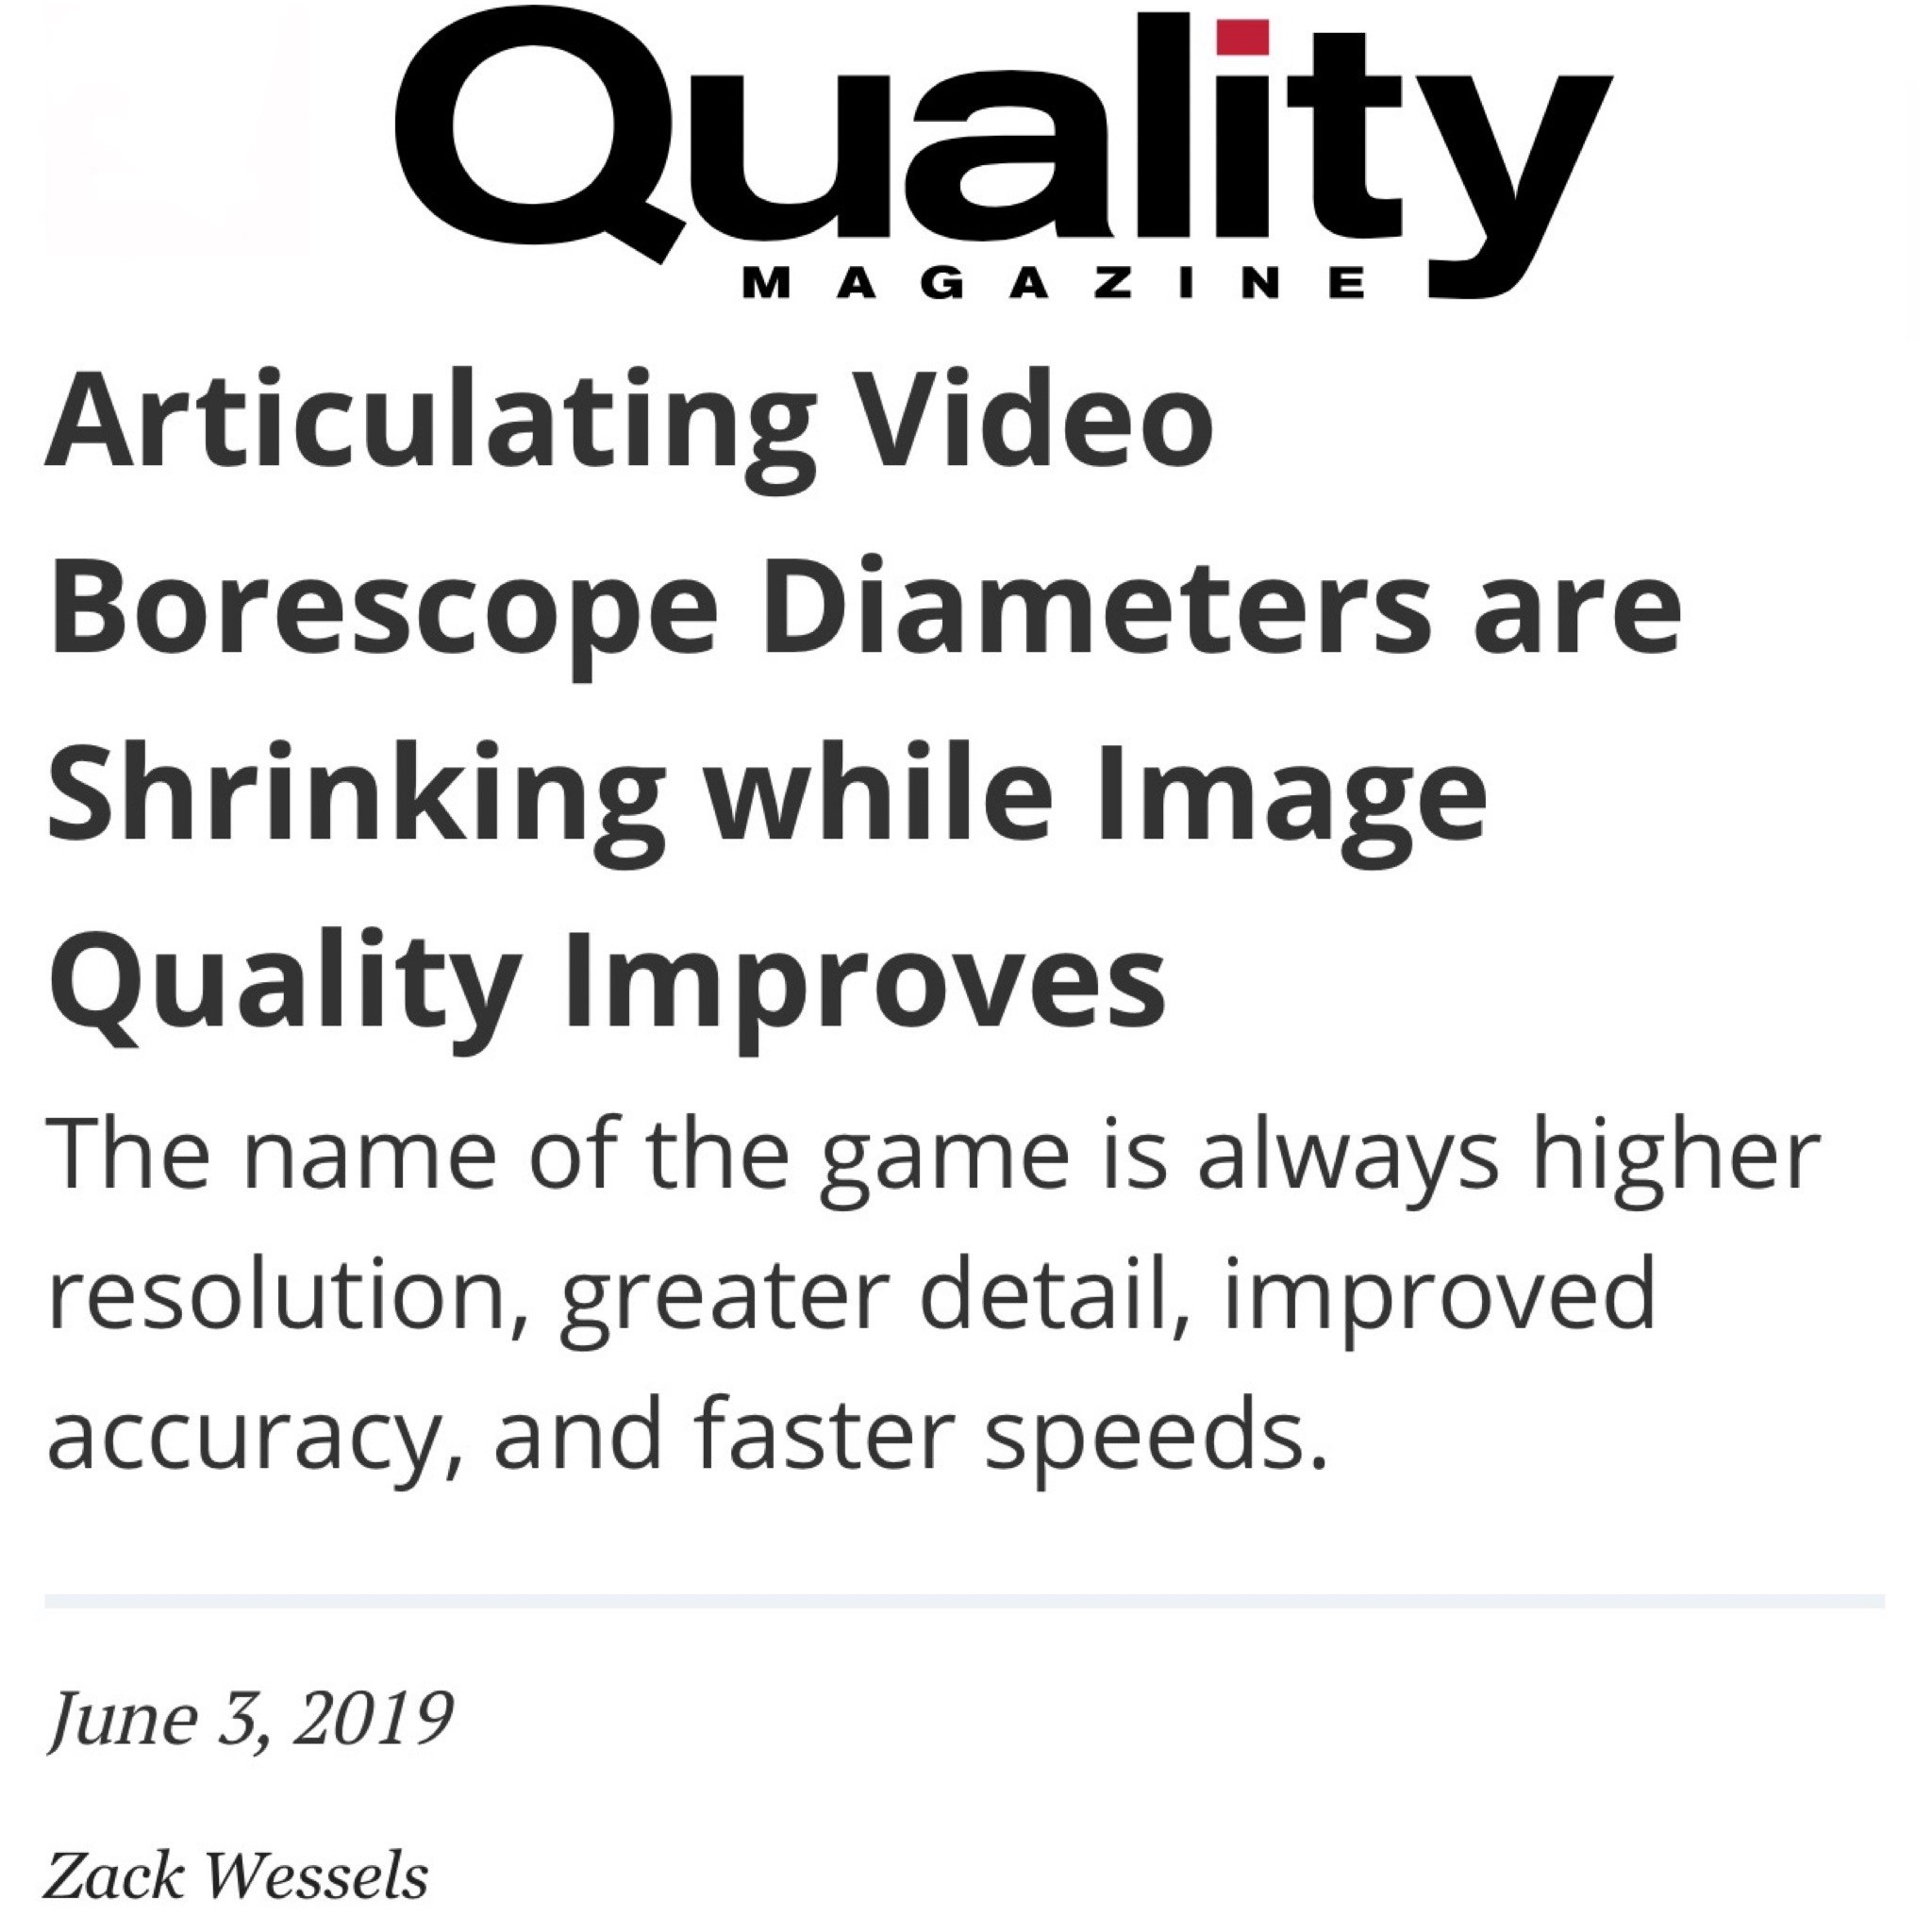 Quality Magazine Borescope Diameters Image Quality